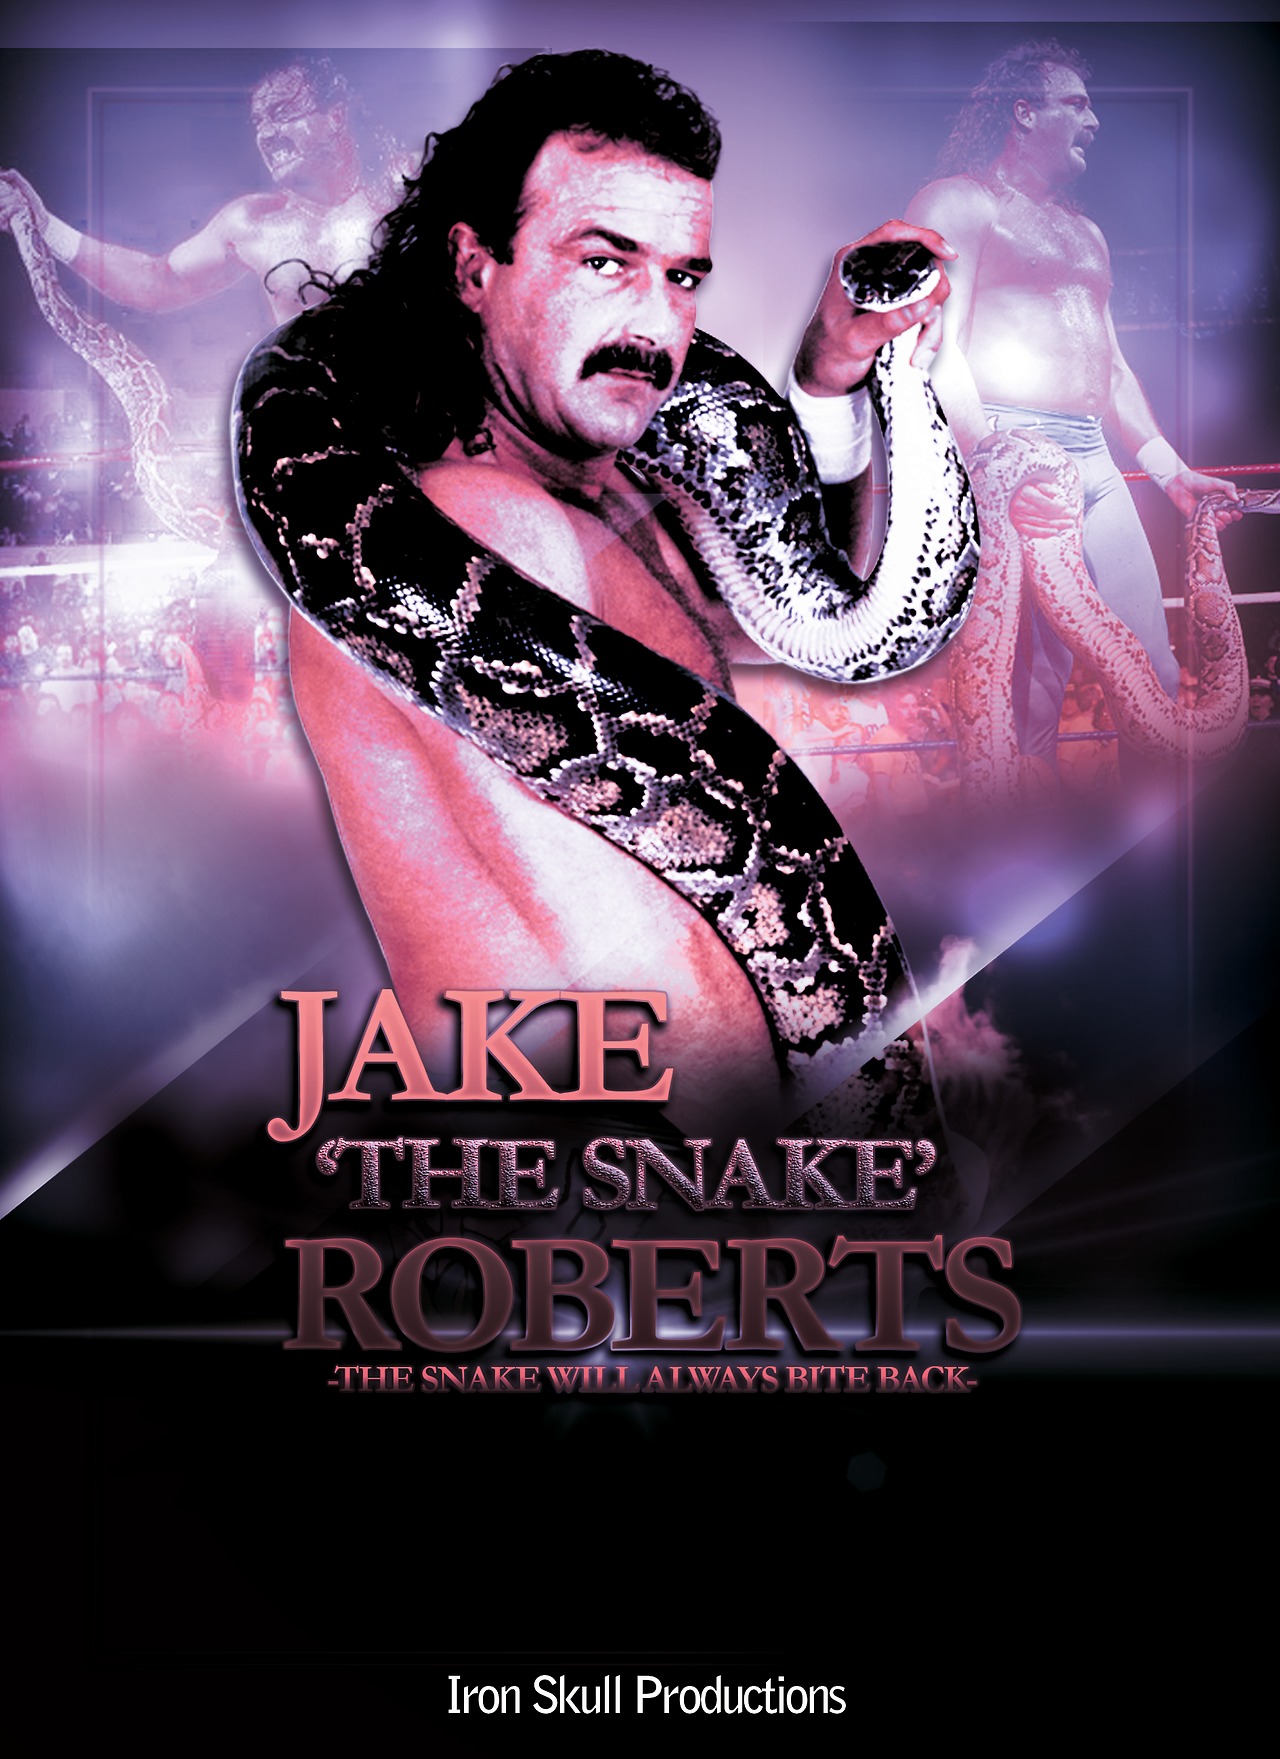 http://orig13.deviantart.net/83cc/f/2013/227/7/8/wwe___jake_the_snake_roberts_poster_by_theironskull-d6ibmf7.jpg